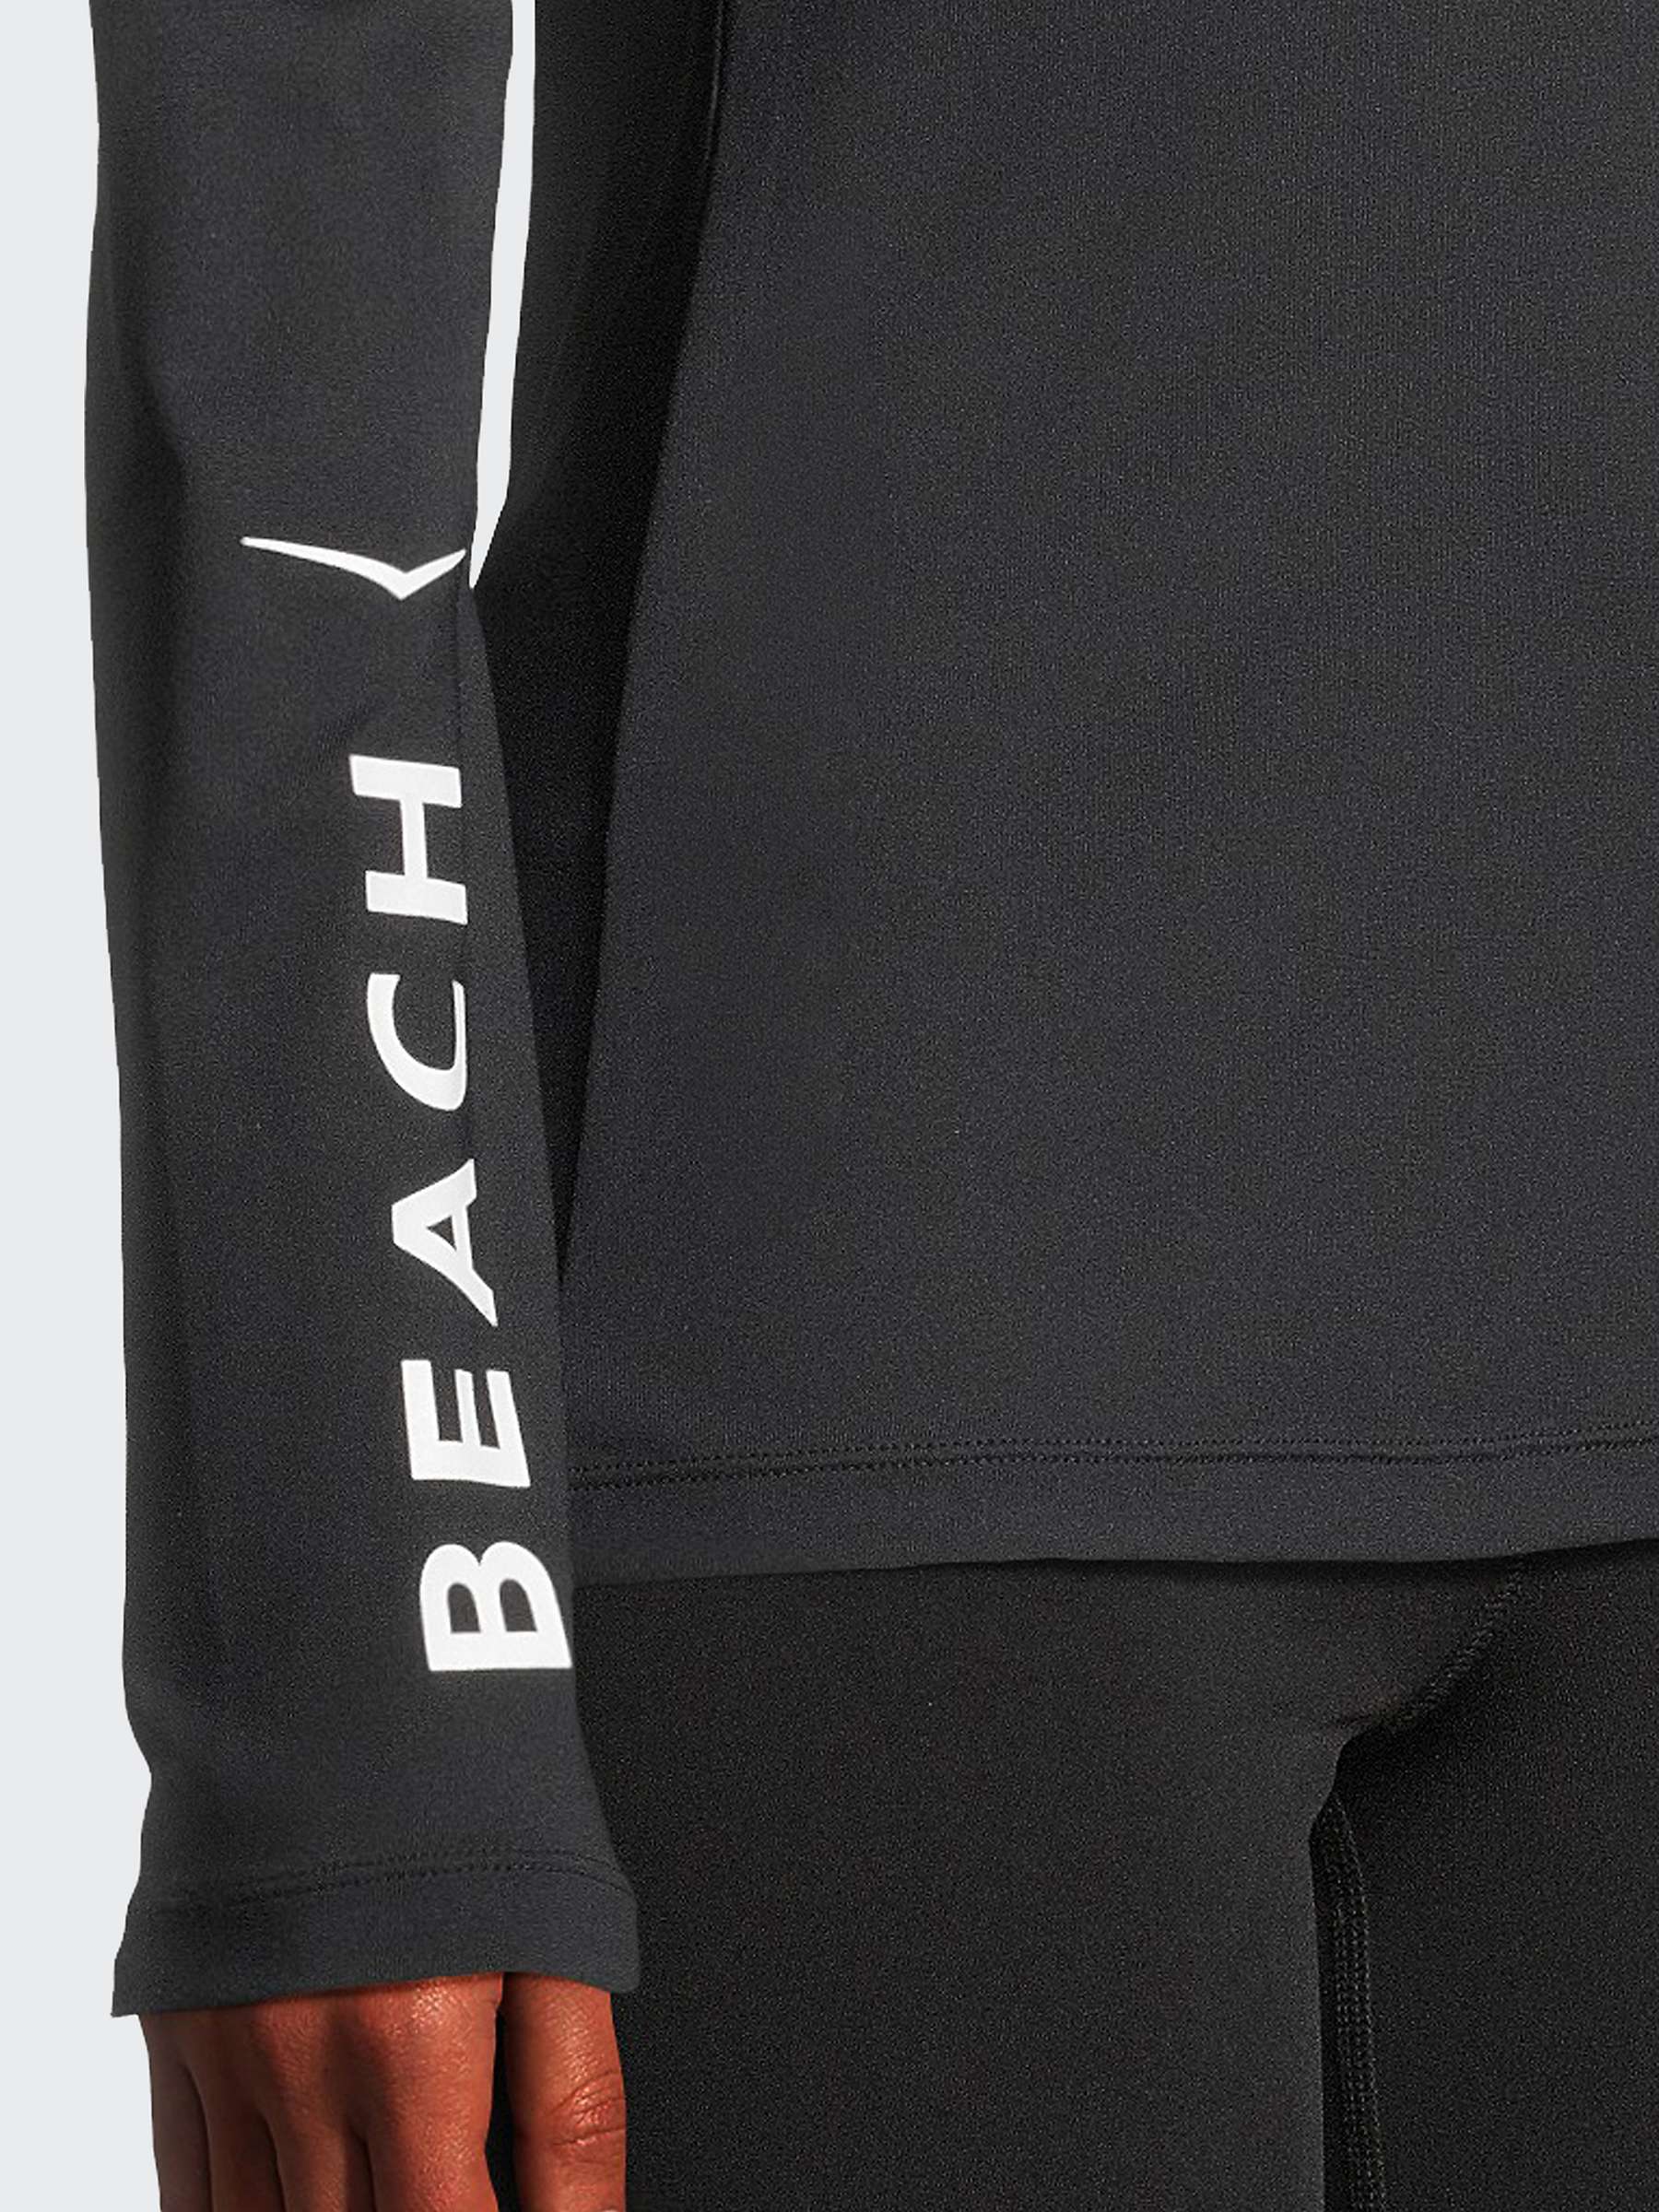 Buy Venice Beach Leana Long Sleeve Top, Black Online at johnlewis.com